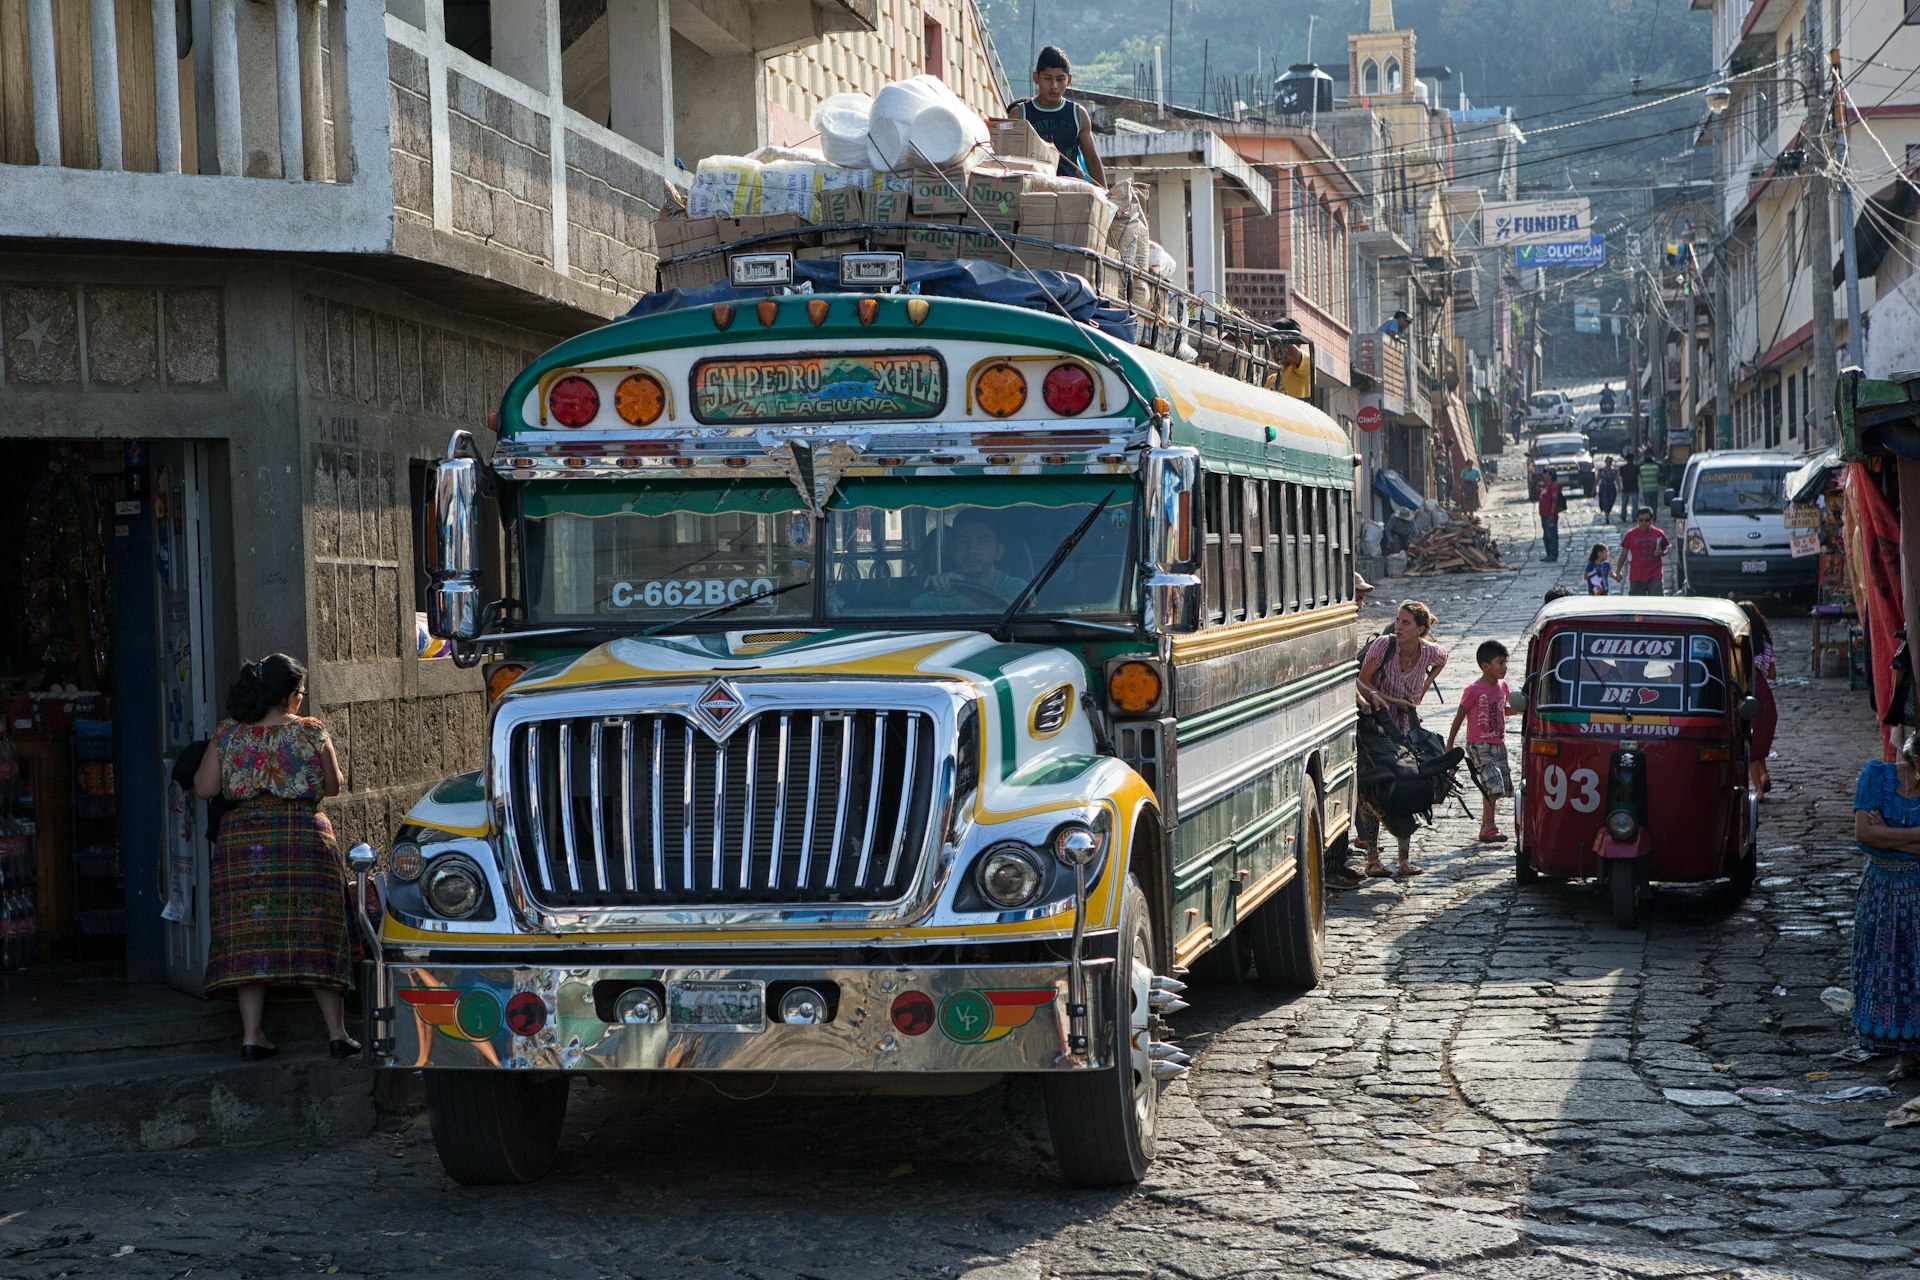 A colorful “chicken bus” (a repainted, purposed school bus) transports riders through the narrow cobblestone streets of San Pedro la Laguna, Guatemala